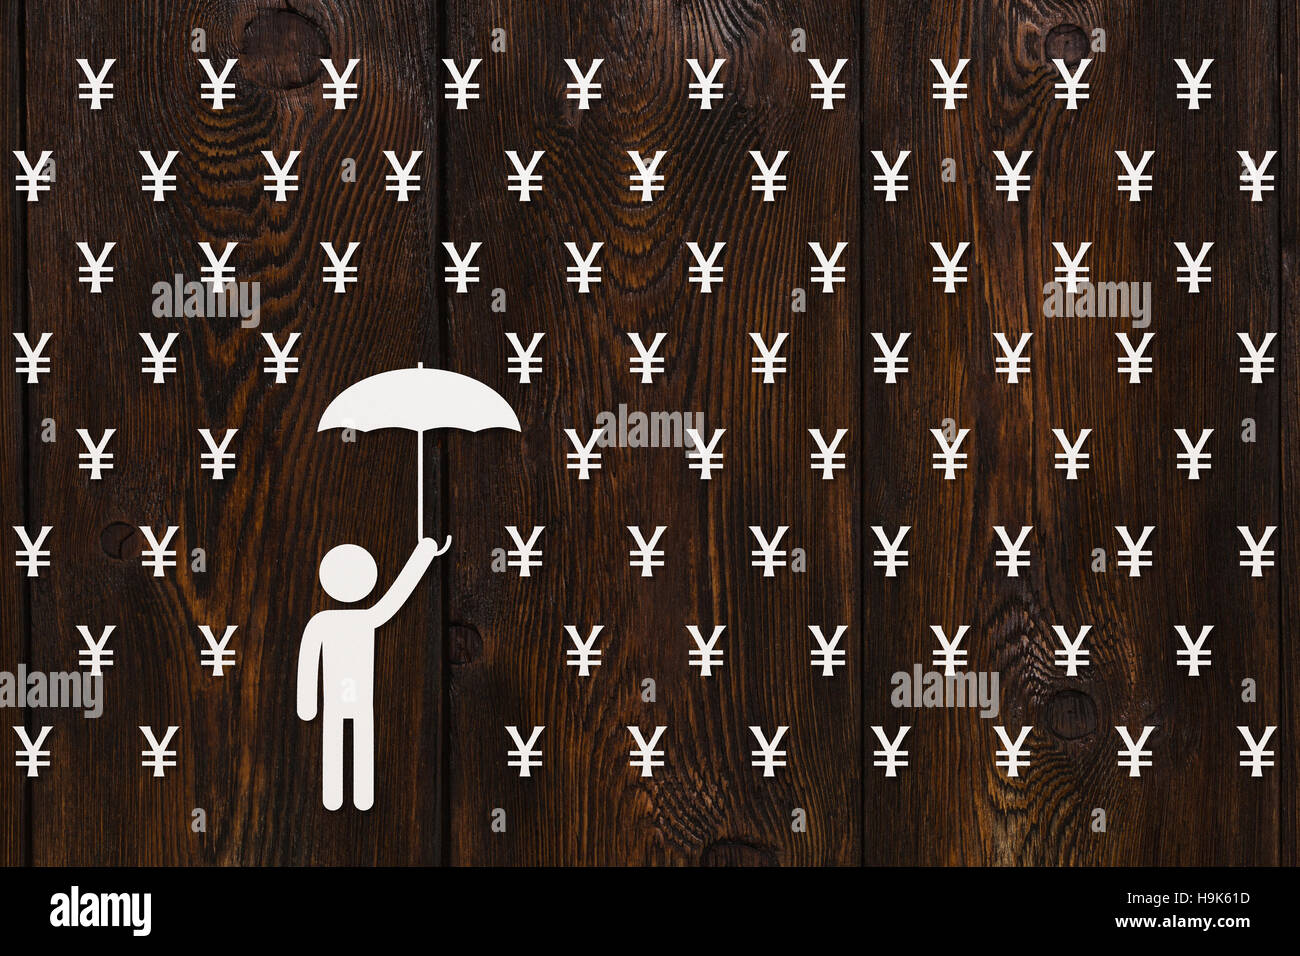 Man with umbrella standing in rain of yen, money concept Stock Photo